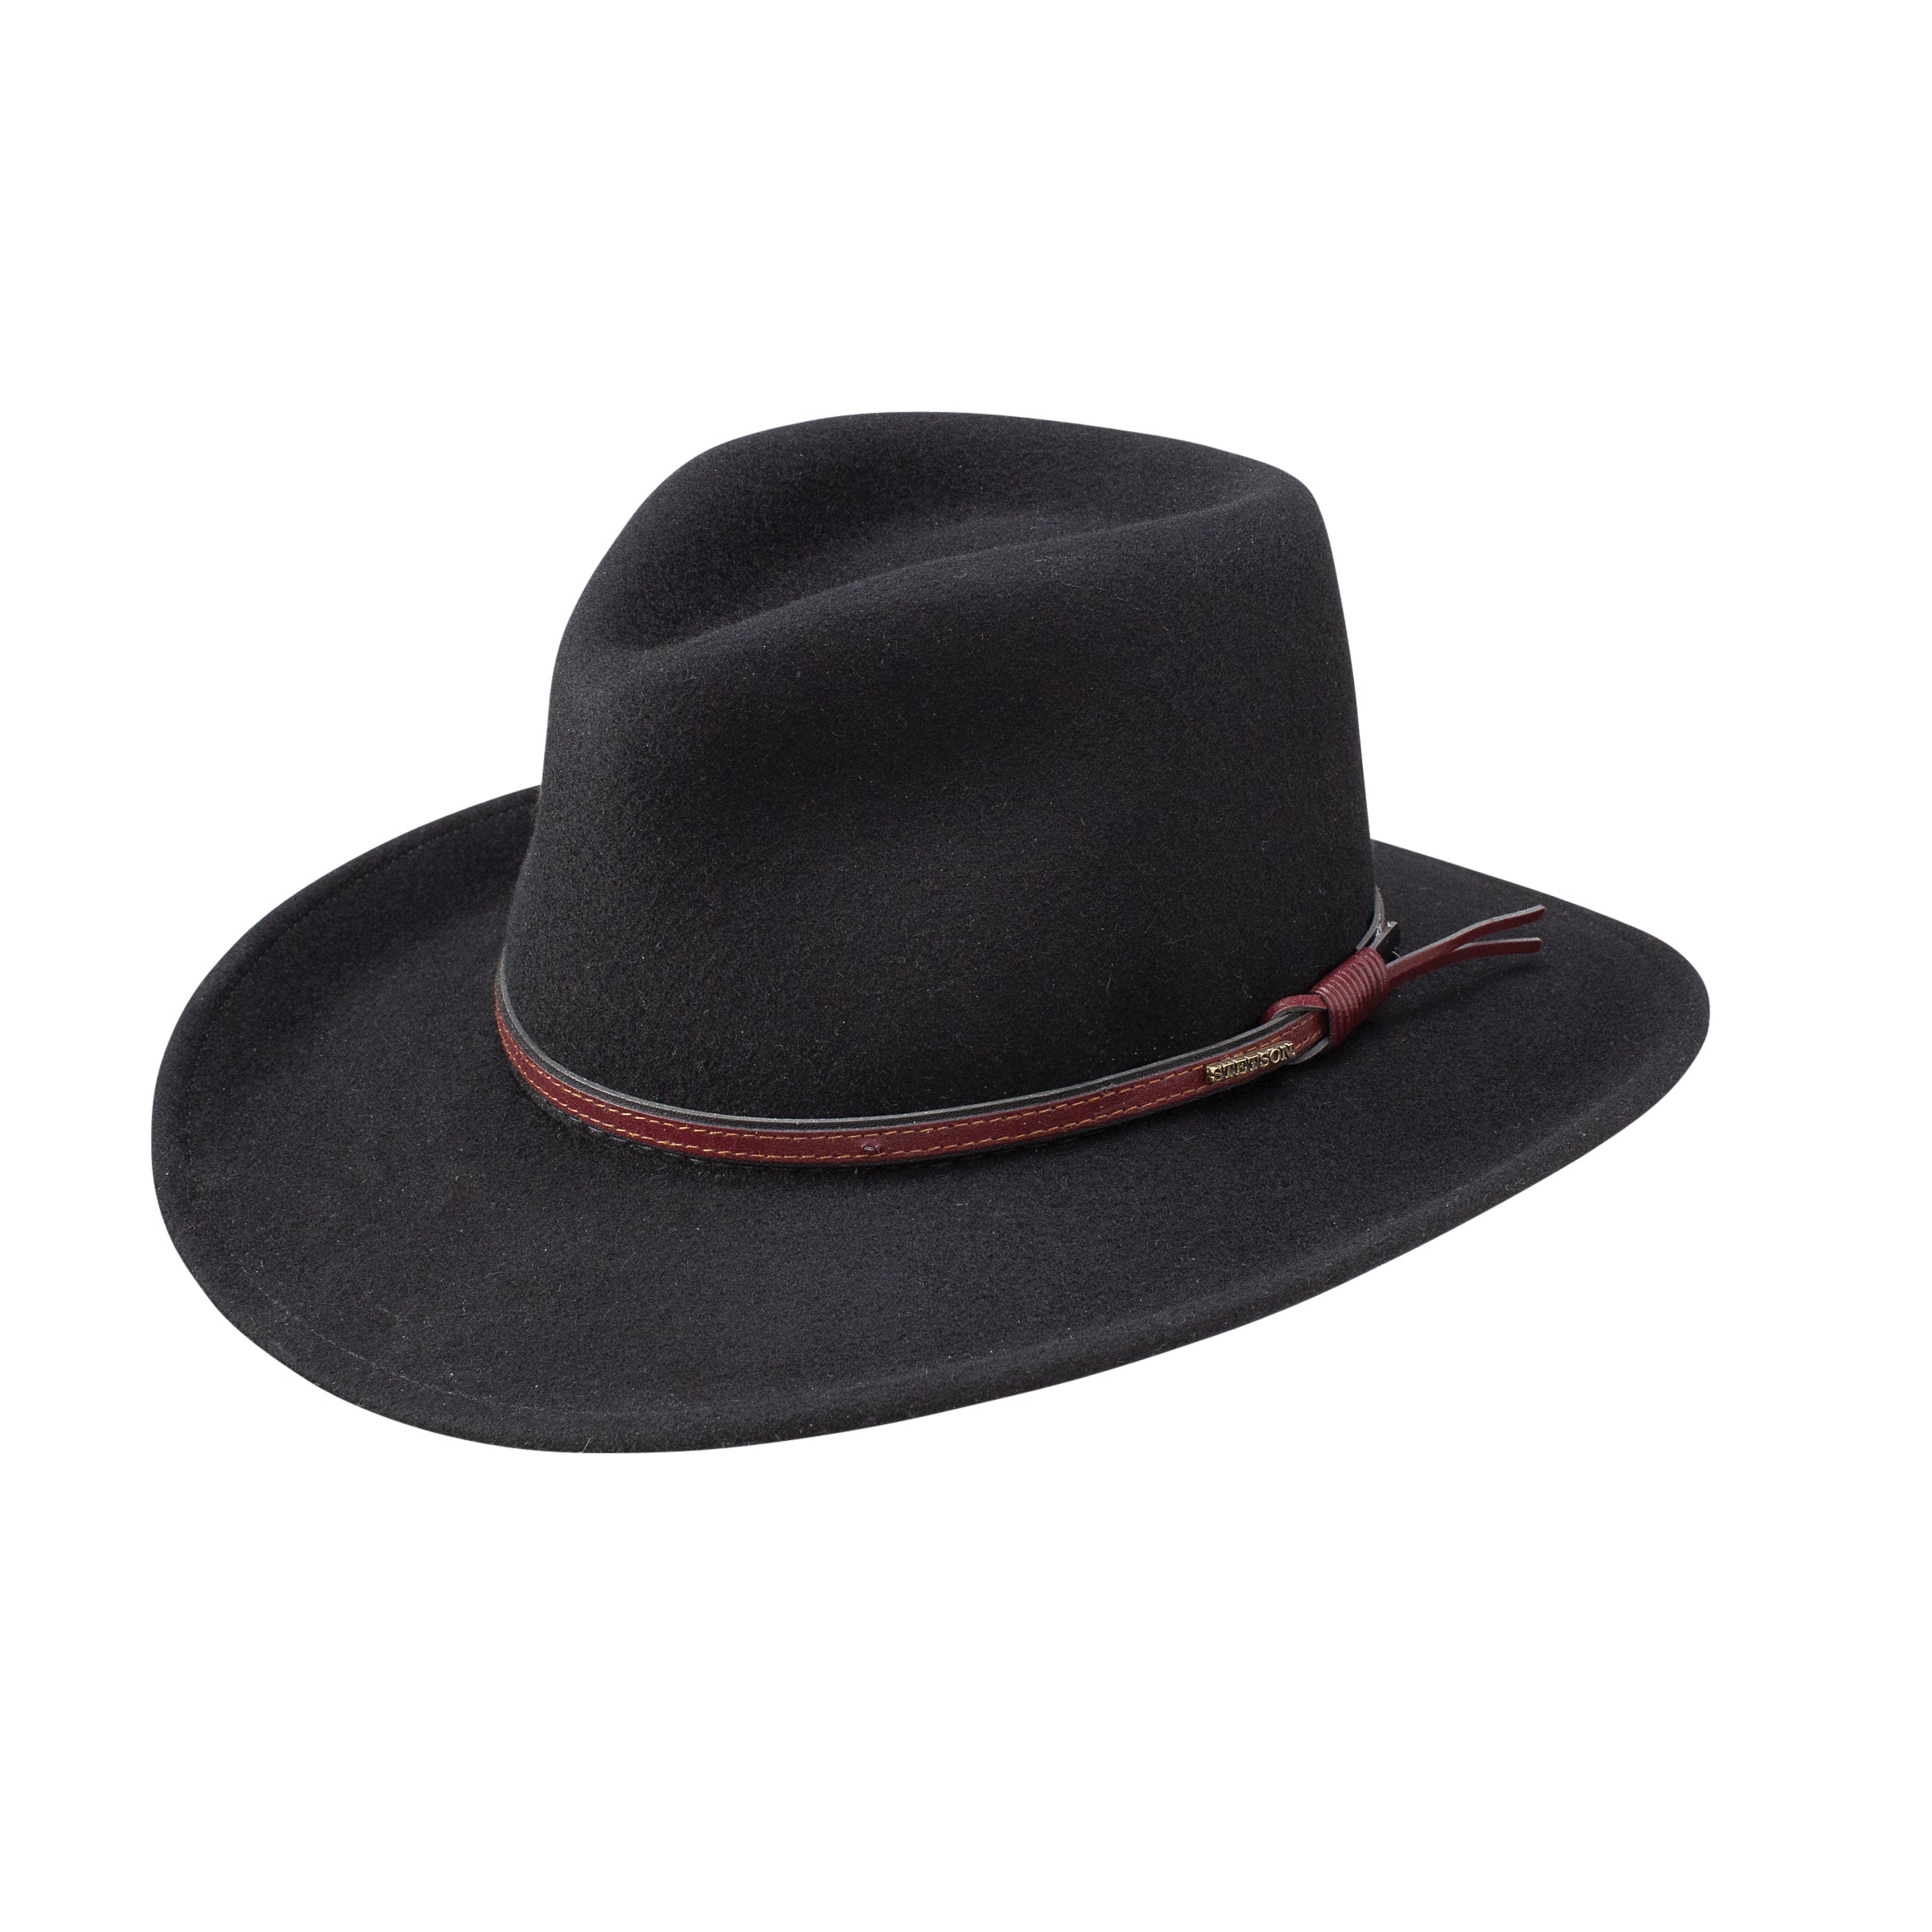 Stetson Bozeman 100% Wool Crushable Hat in Black